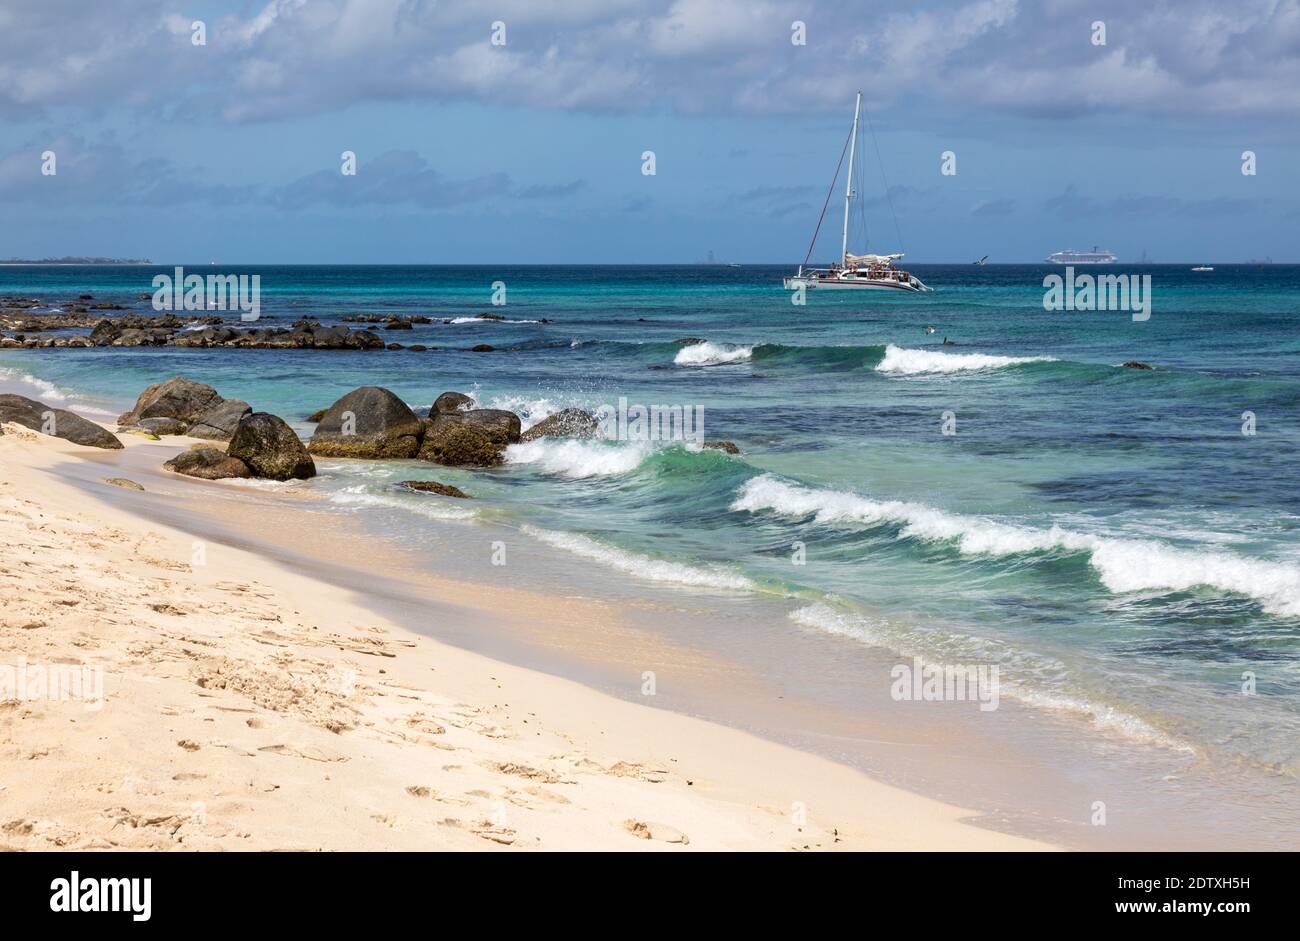 Arashi beach and a yacht sailing in the turquoise water of the Caribbean Sea, Aruba, Caribbean Stock Photo